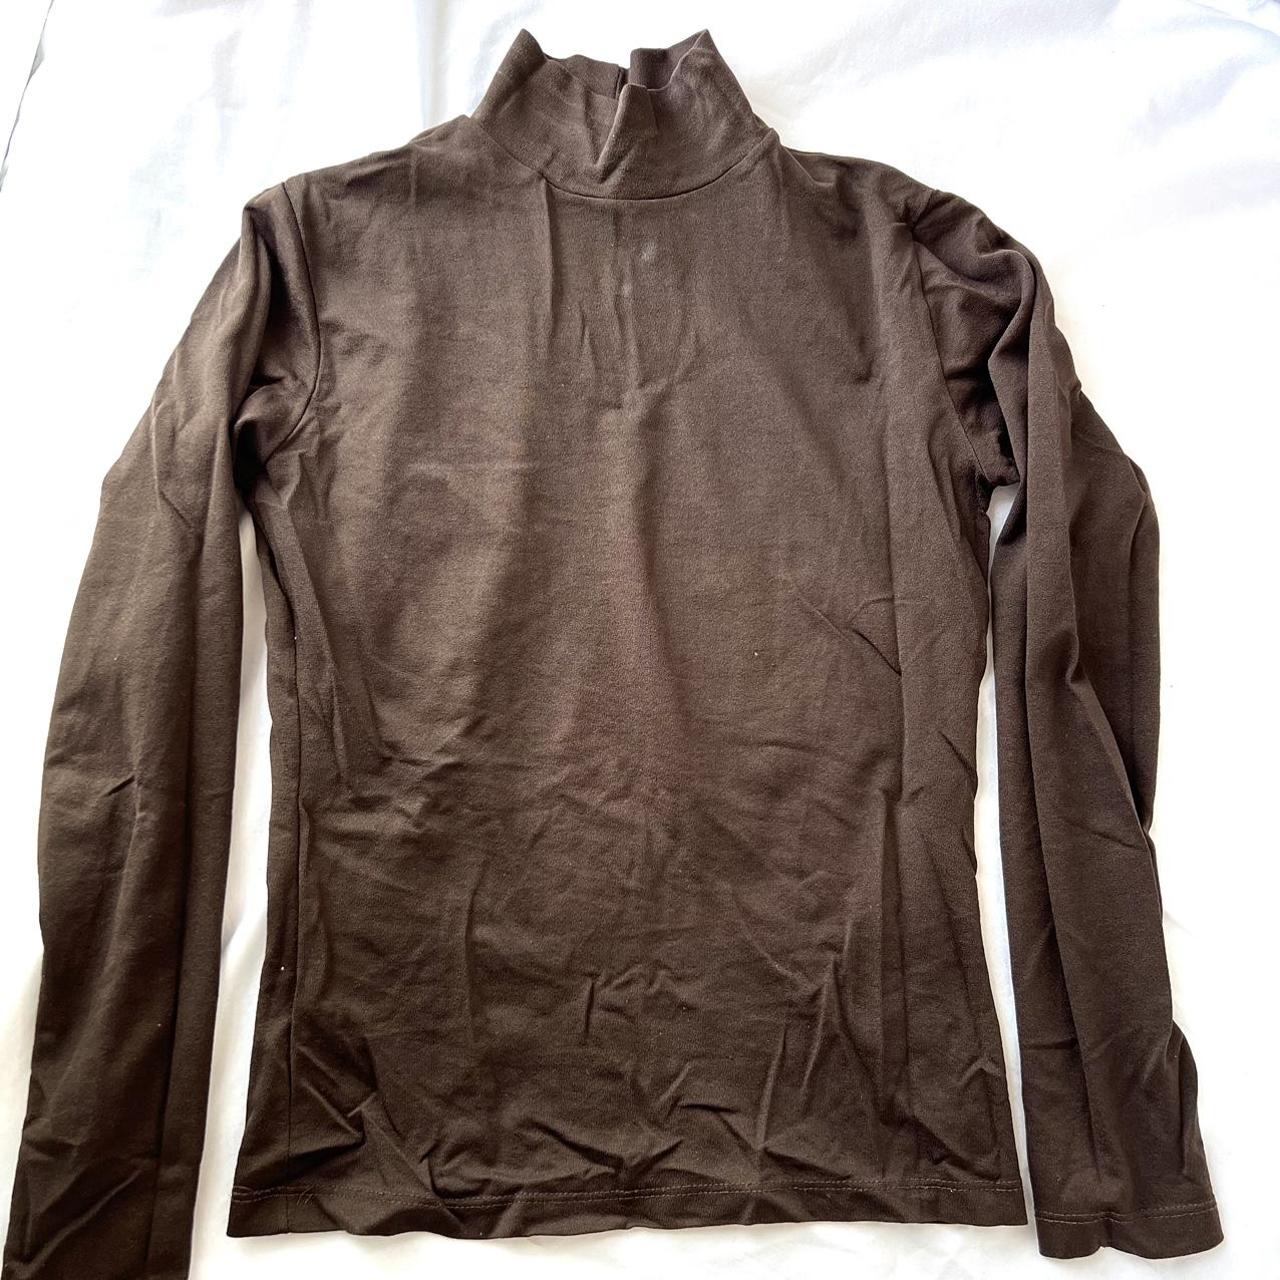 Urban Outfitters Women's Brown Shirt (3)